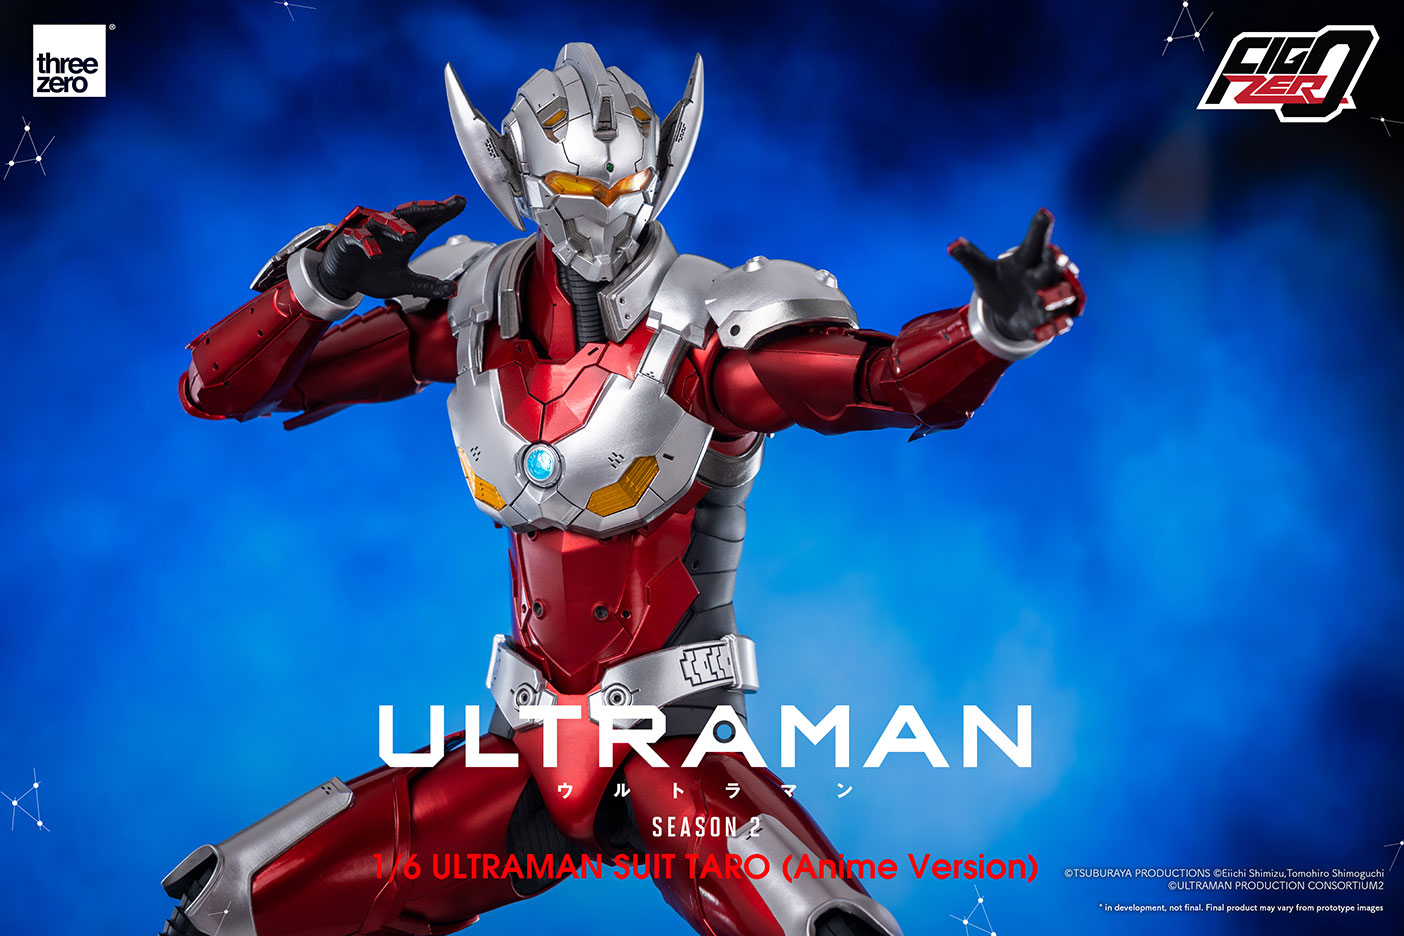 threezero - FigZero - Netflix&#39;s Ultraman - Ultraman Suit Taro (1/6 Scale) - Marvelous Toys